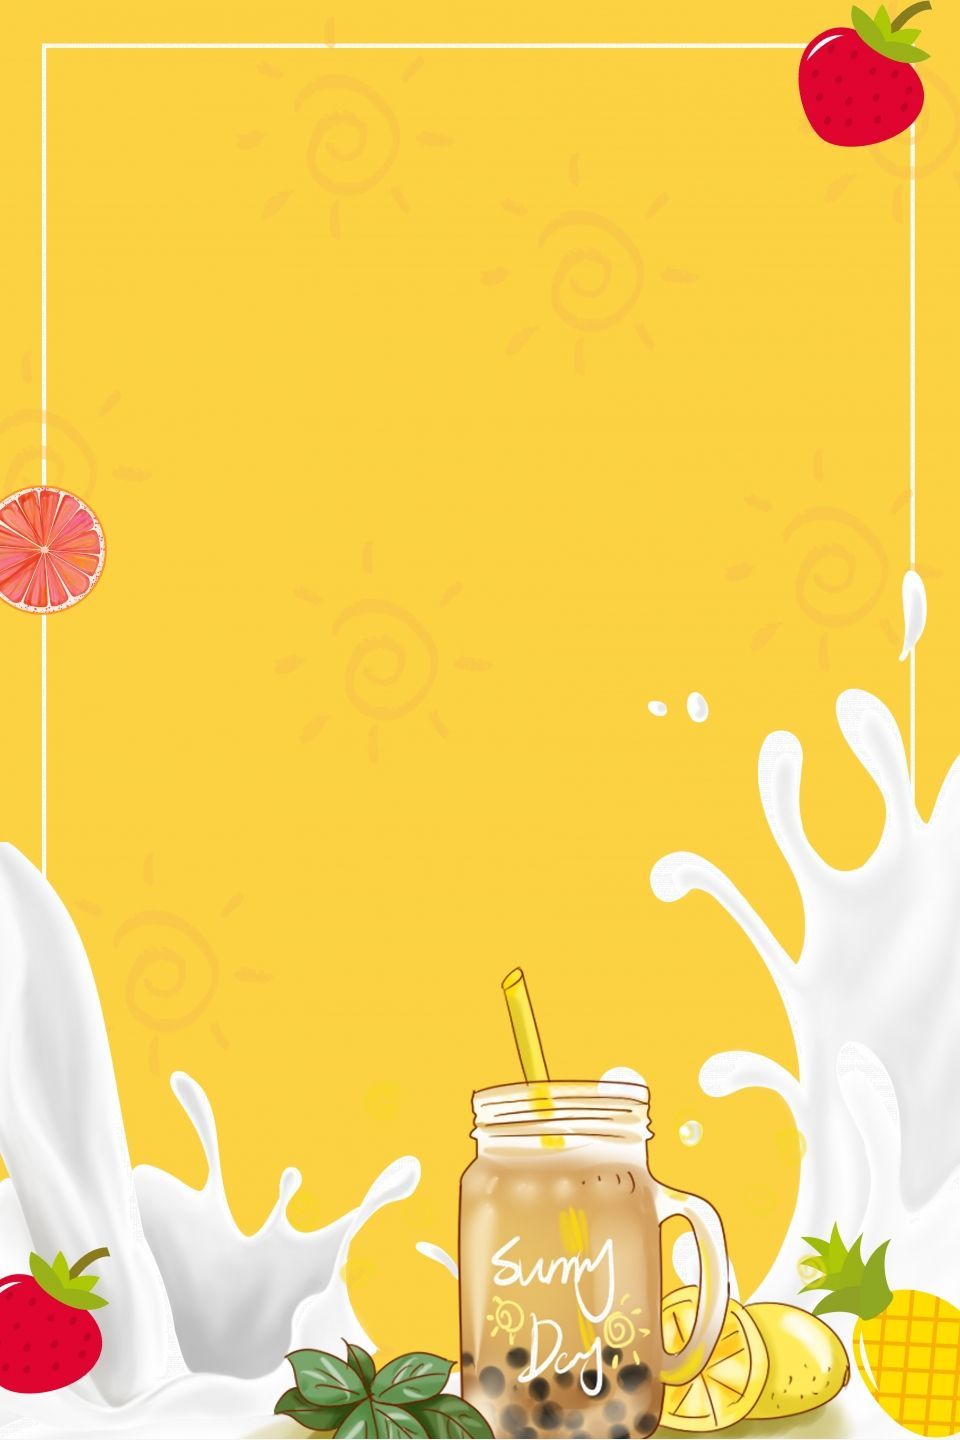 Milk Tea Poster Background Material. Tea wallpaper, Milk tea, Tea illustration